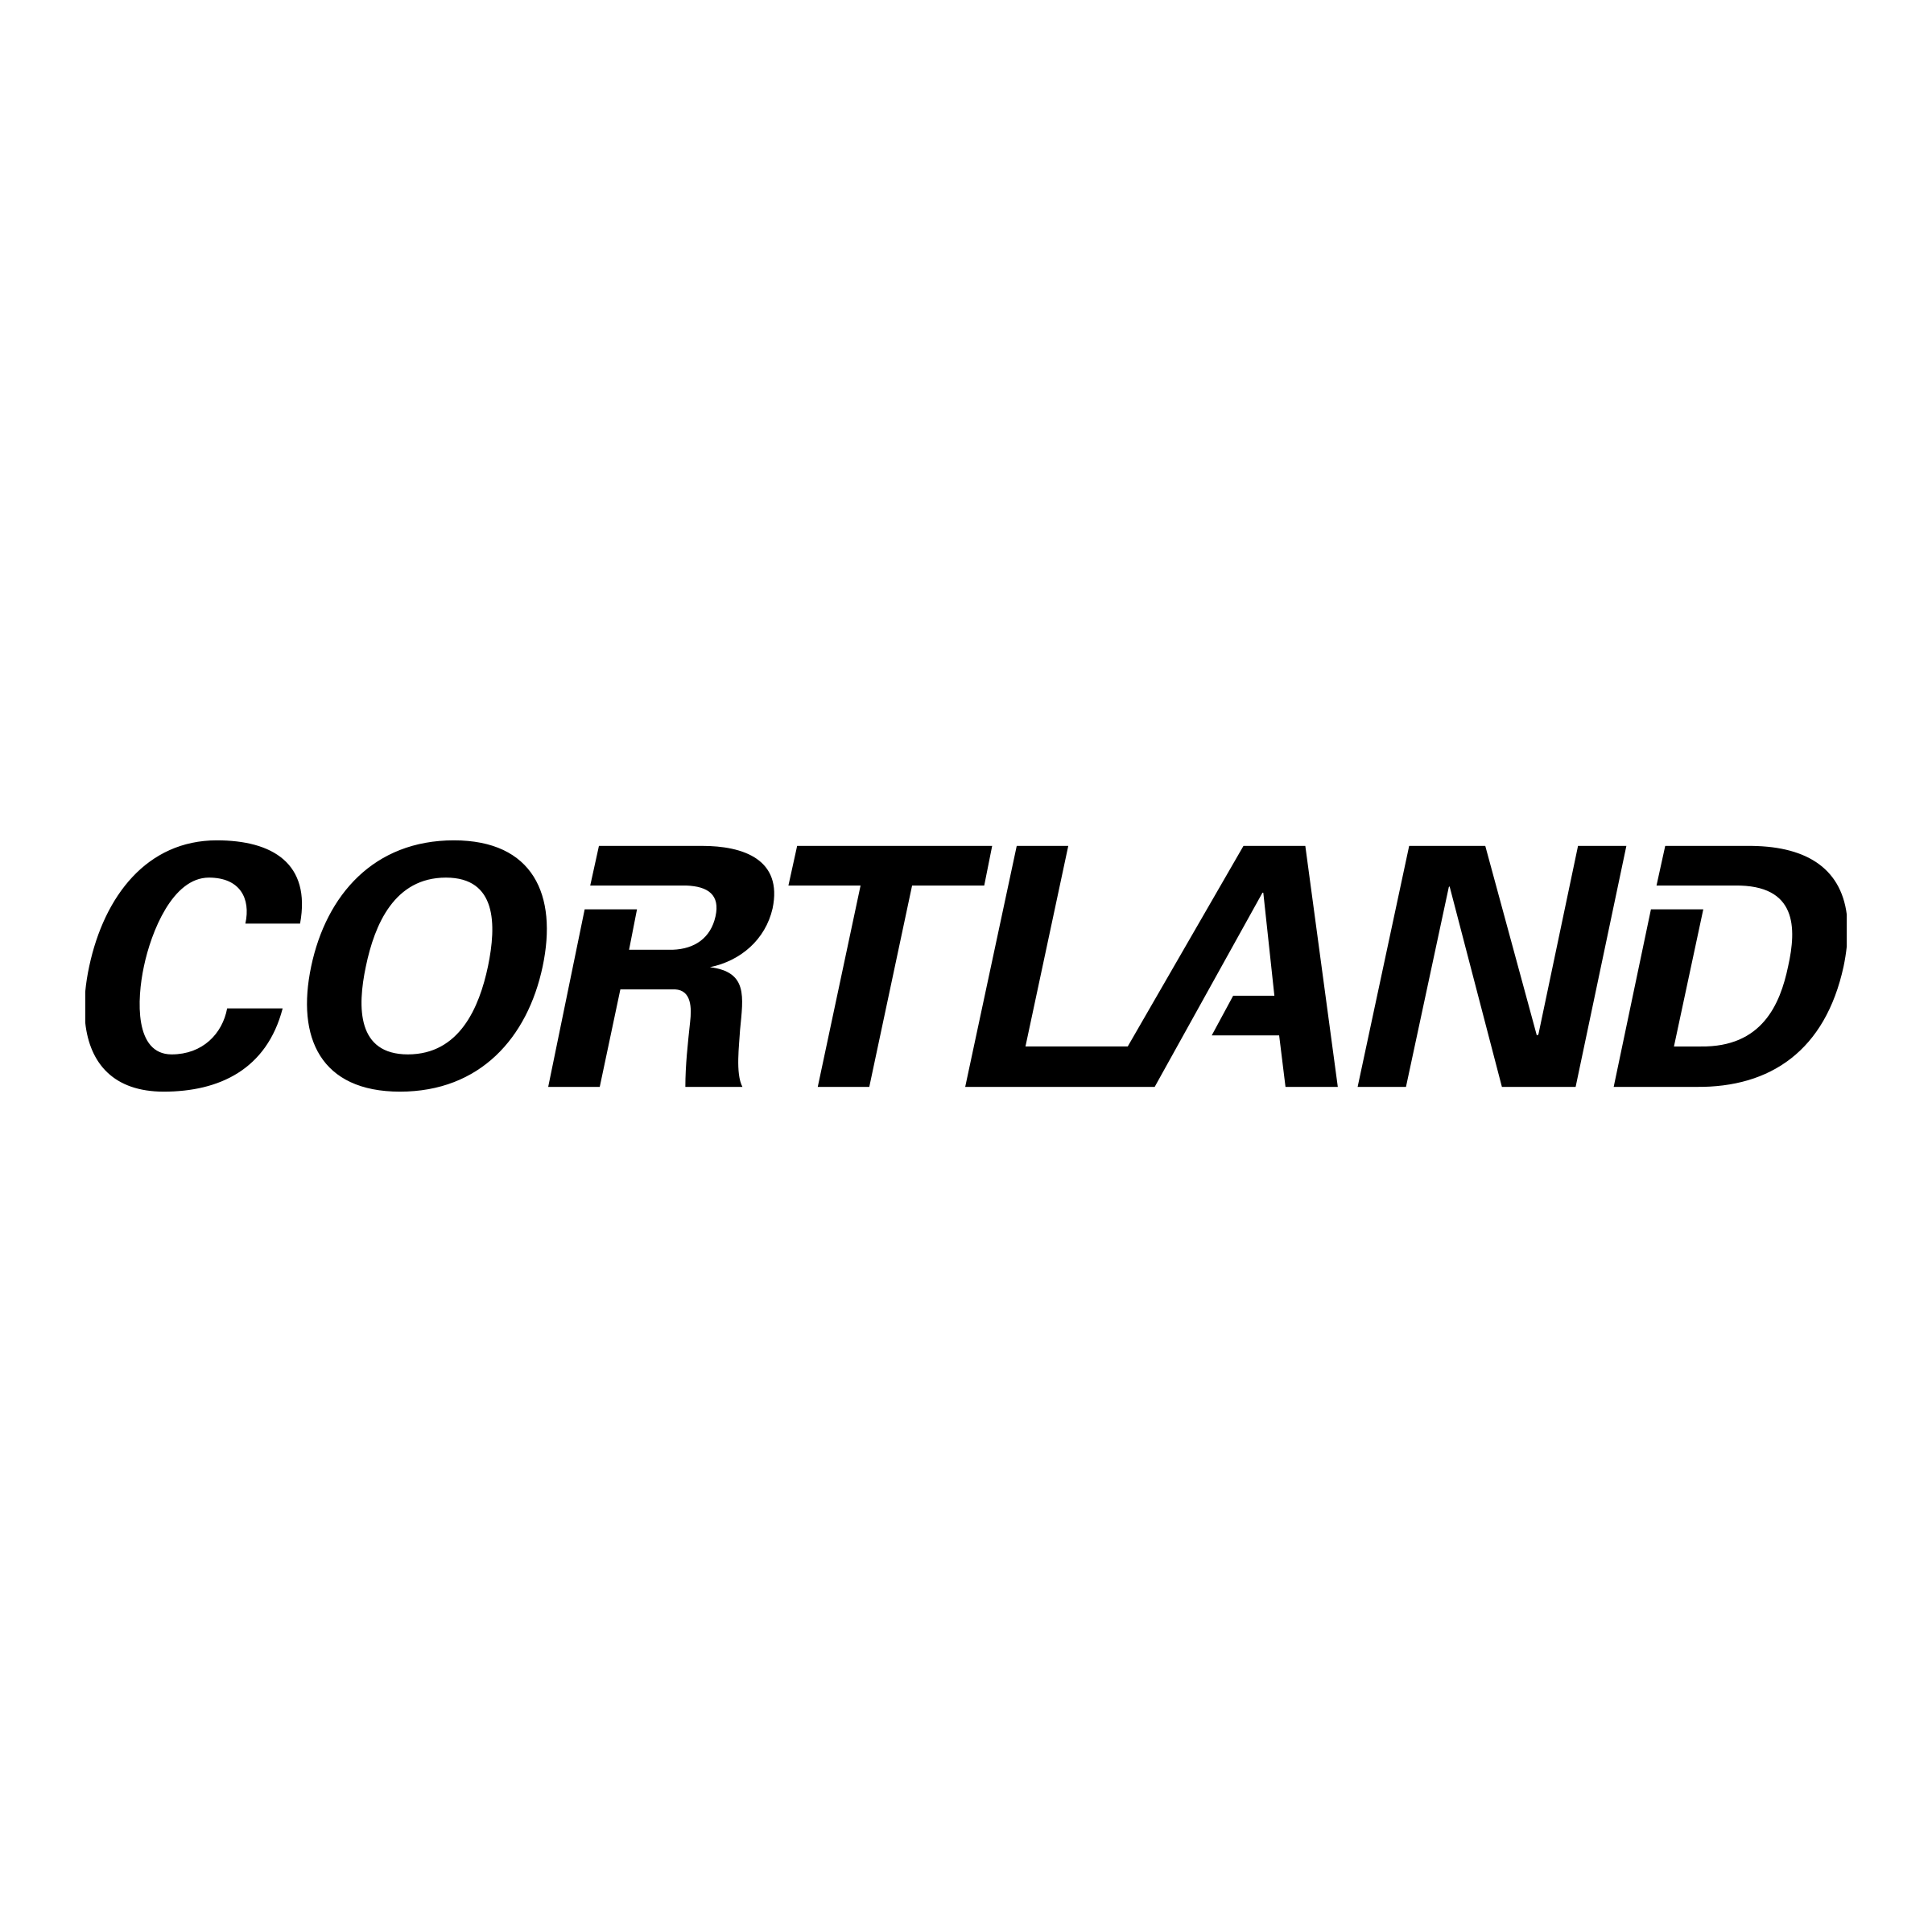 Cortland Logo - Cortland Logo PNG Transparent & SVG Vector